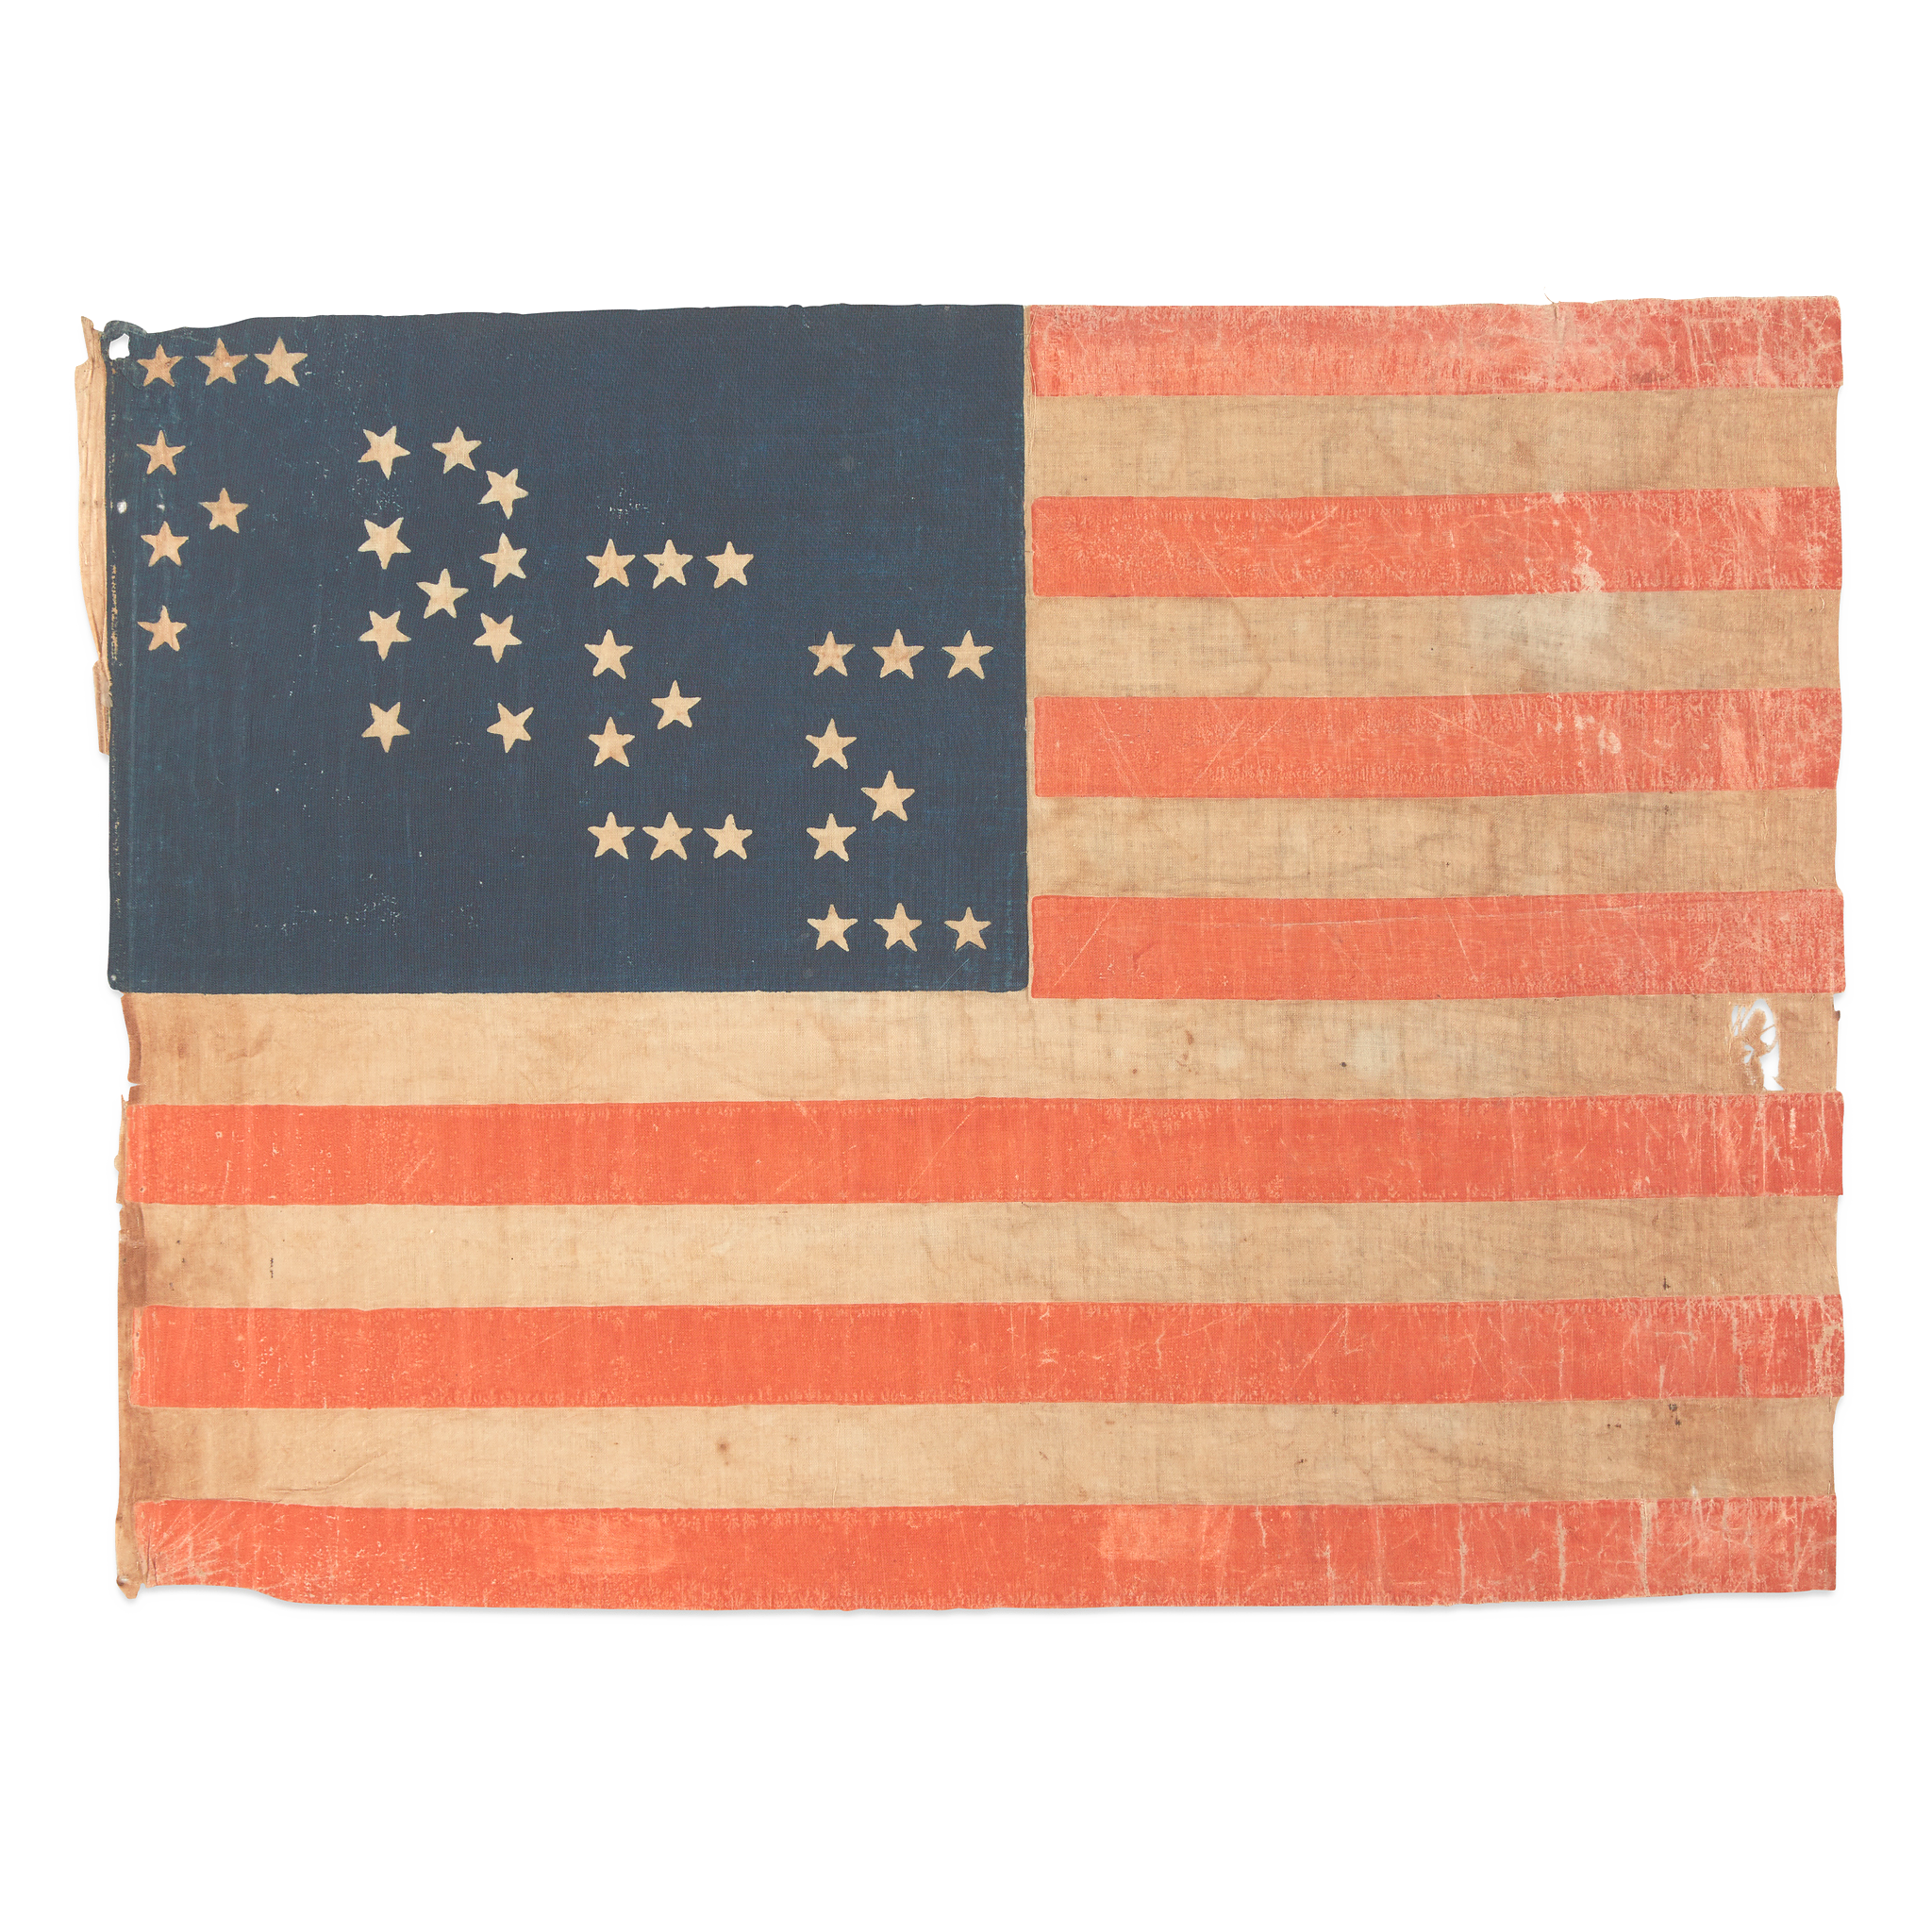 Lot 53 | A 35-Star 'Free Soil Party' parade Flag, circa 1860, $12,000-22,000